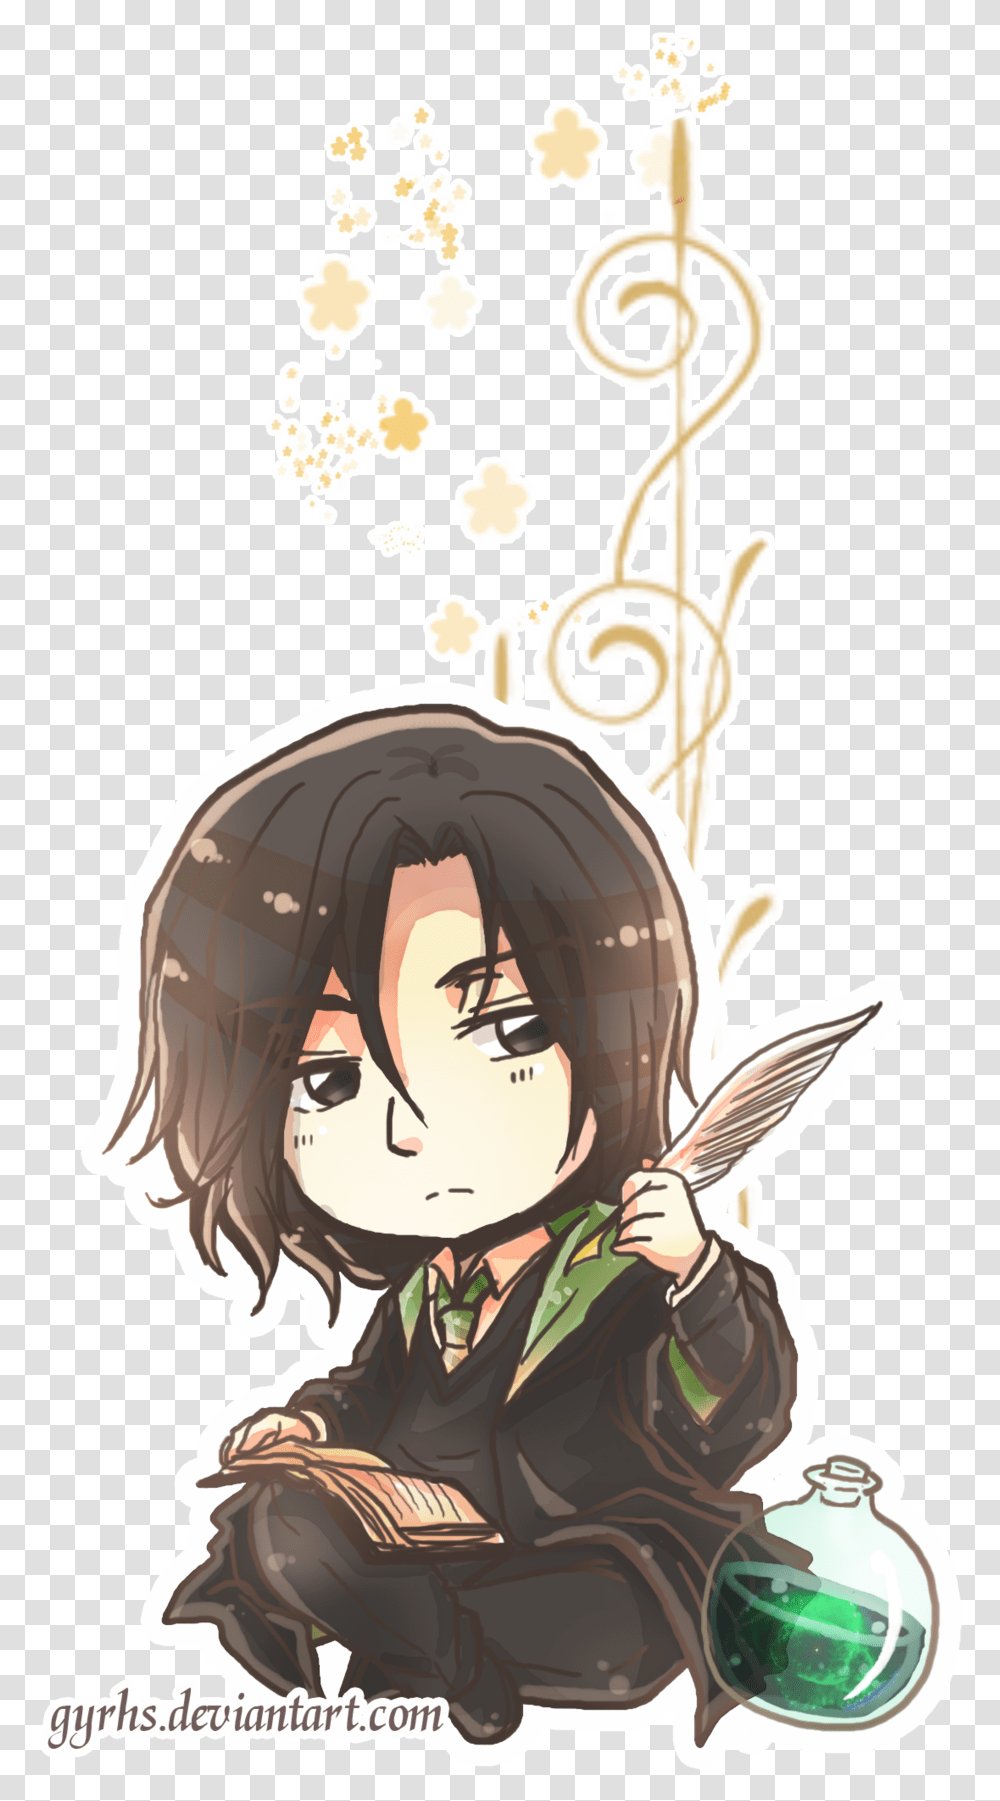 Severus Snape Fanart Chibi, Person, Human, Jewelry, Accessories Transparent Png